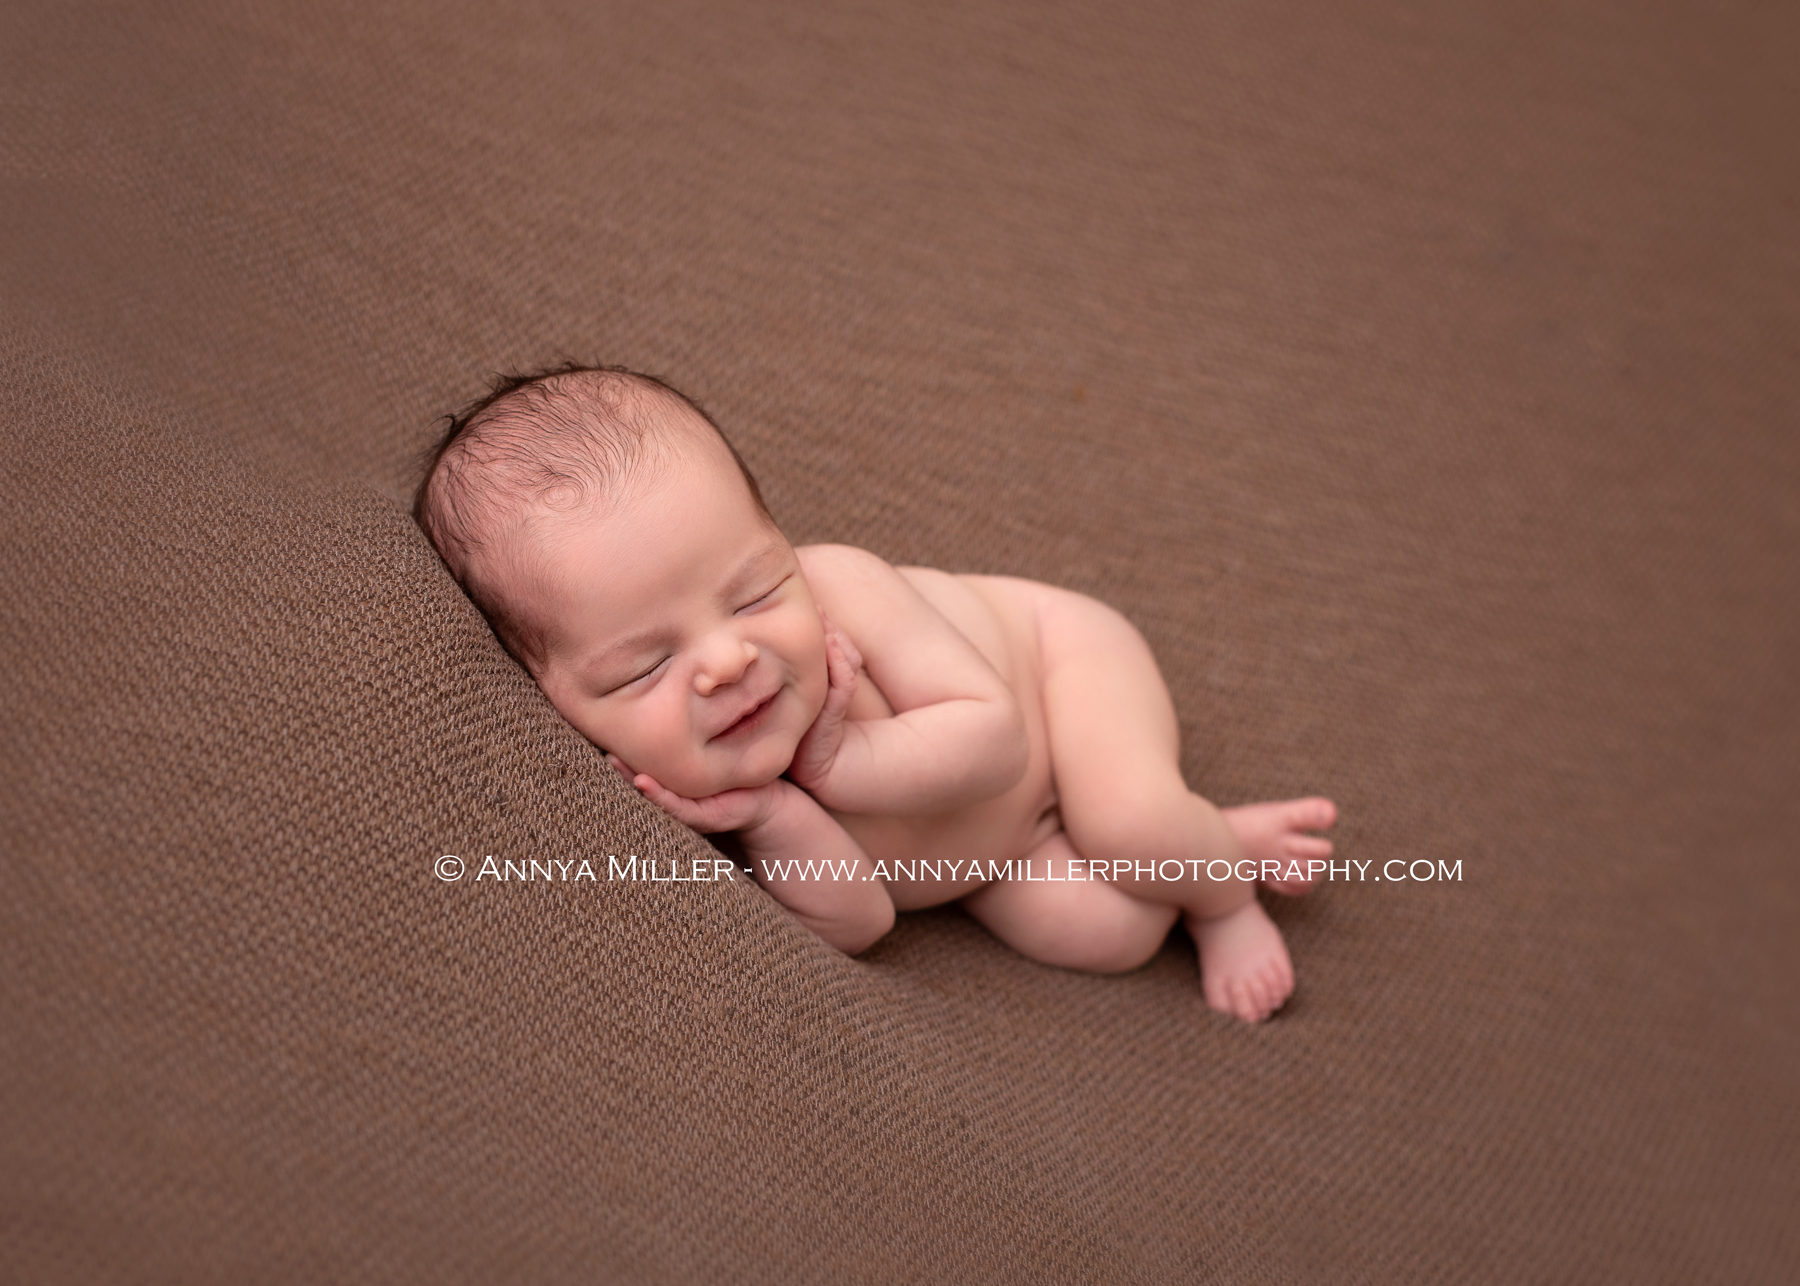 Baby boy sleeping on blanket and smiling in Durham newborn photos